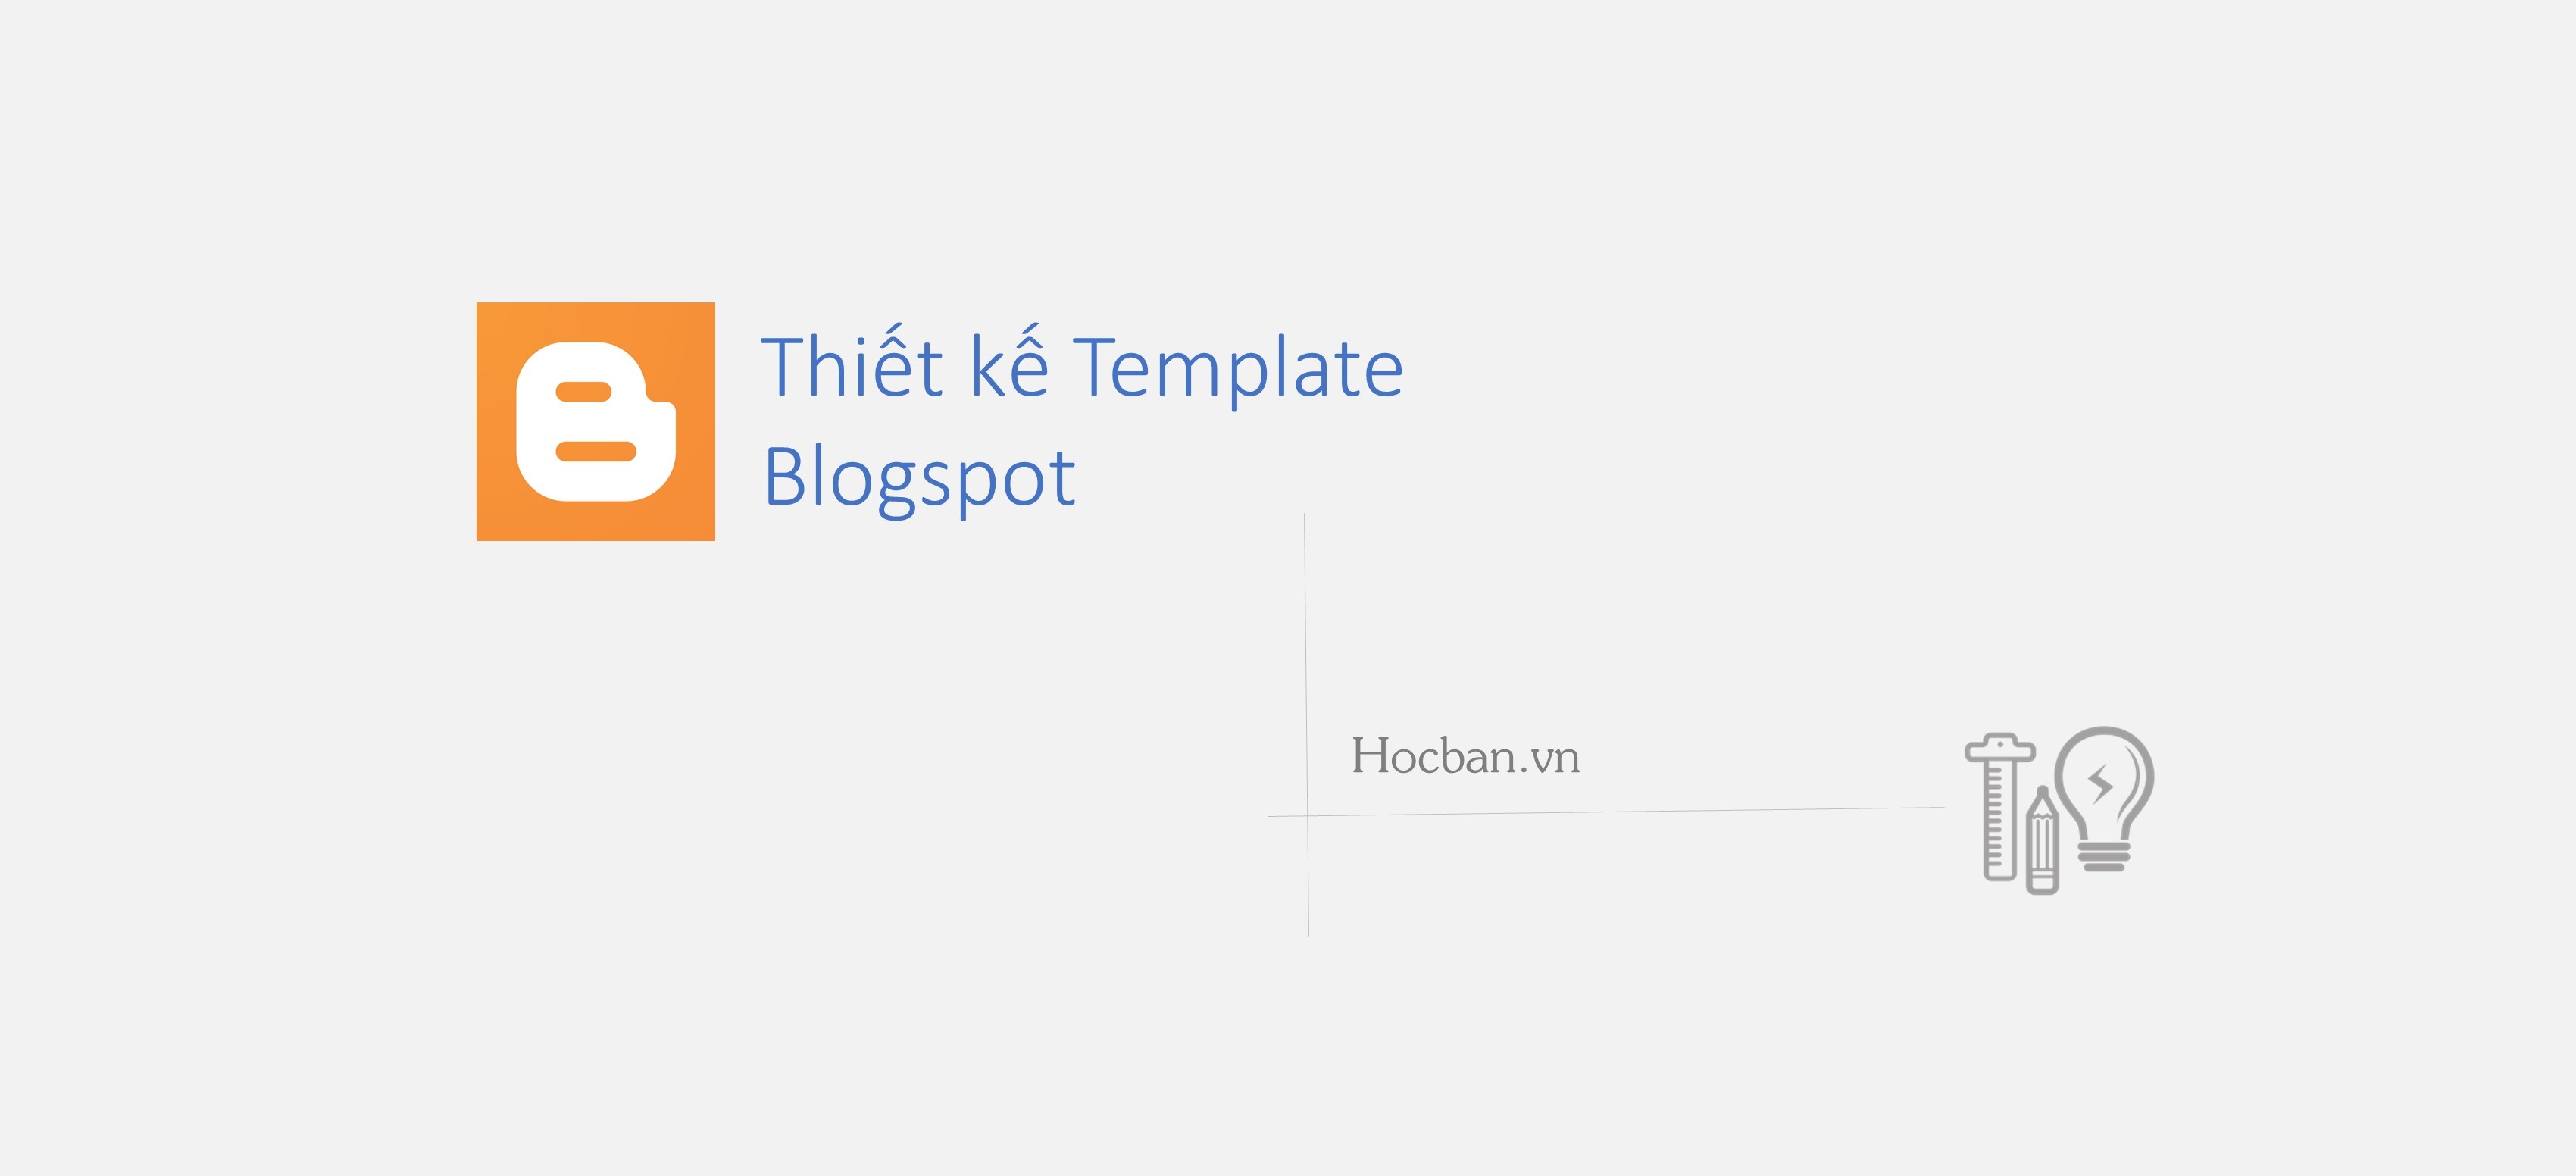 Thiet ke template blogspot - blogger